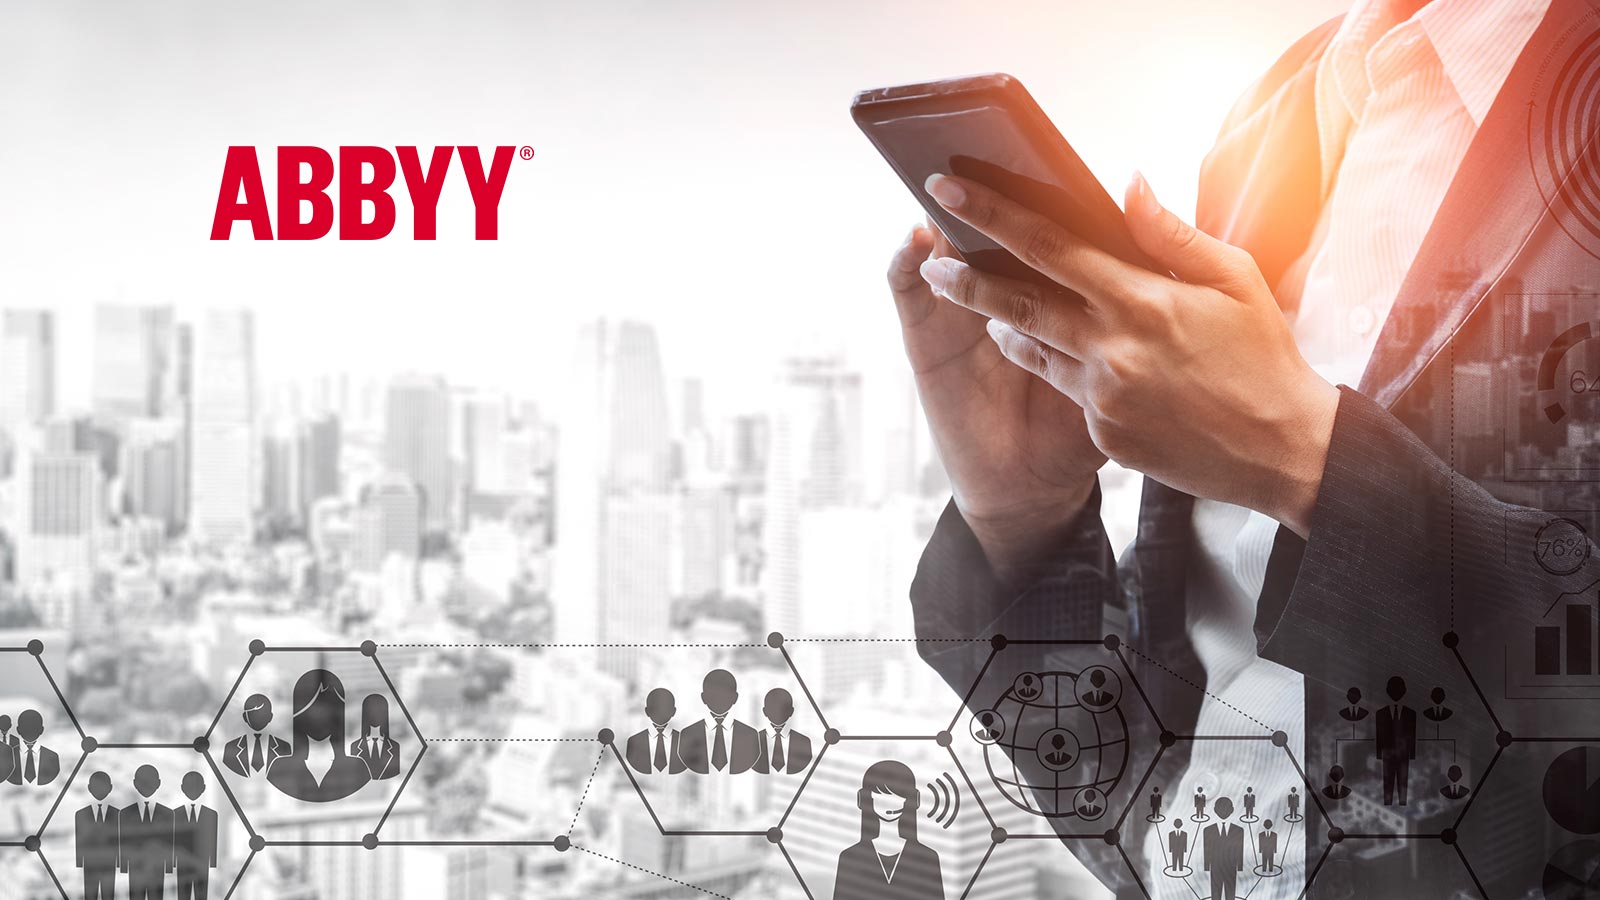 ABBYY Company Profile: Valuation, Funding & Investors